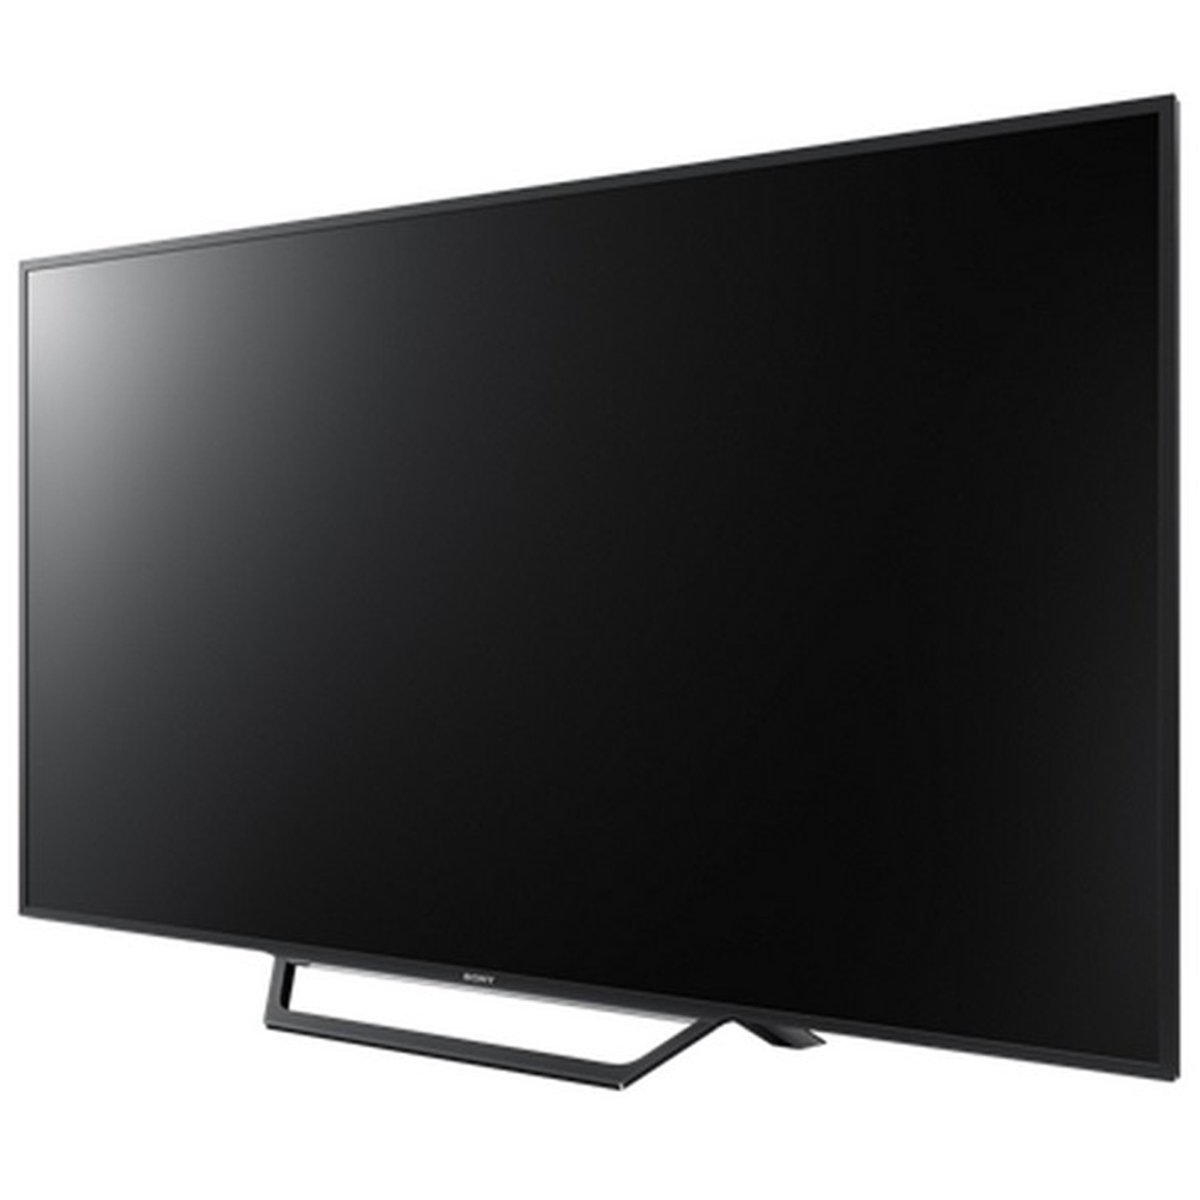 Sony Full HD Smart LED TV KDL55W650D 55inch